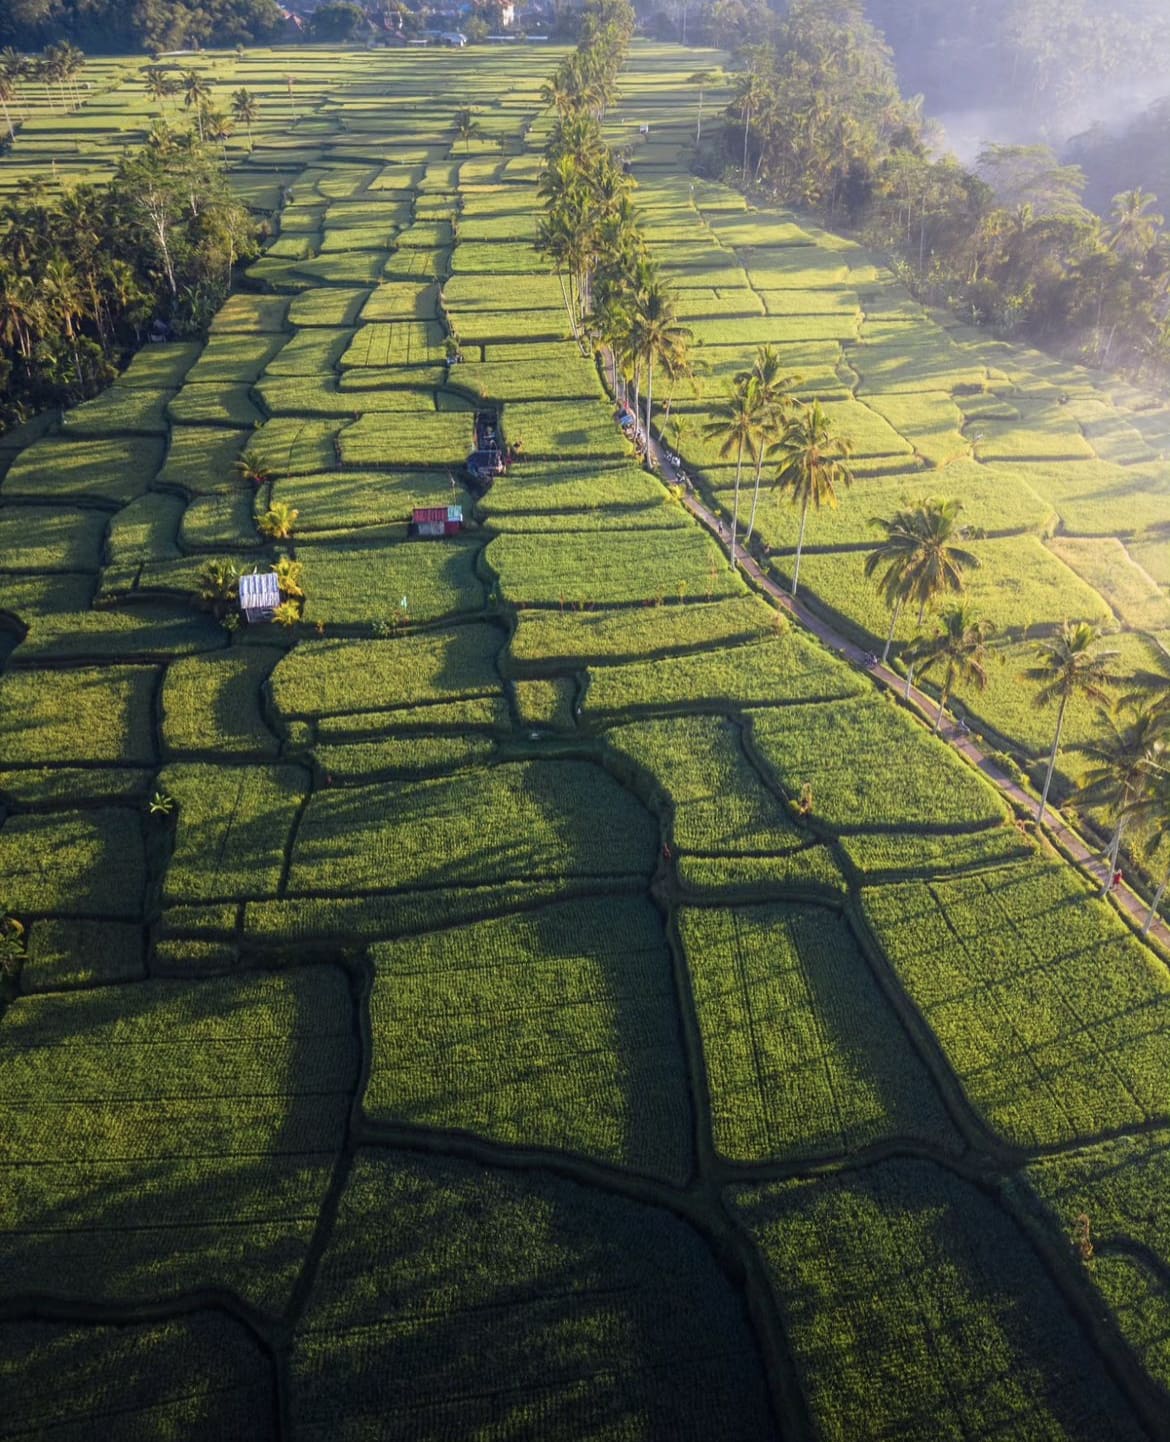 Rice fields, Bali